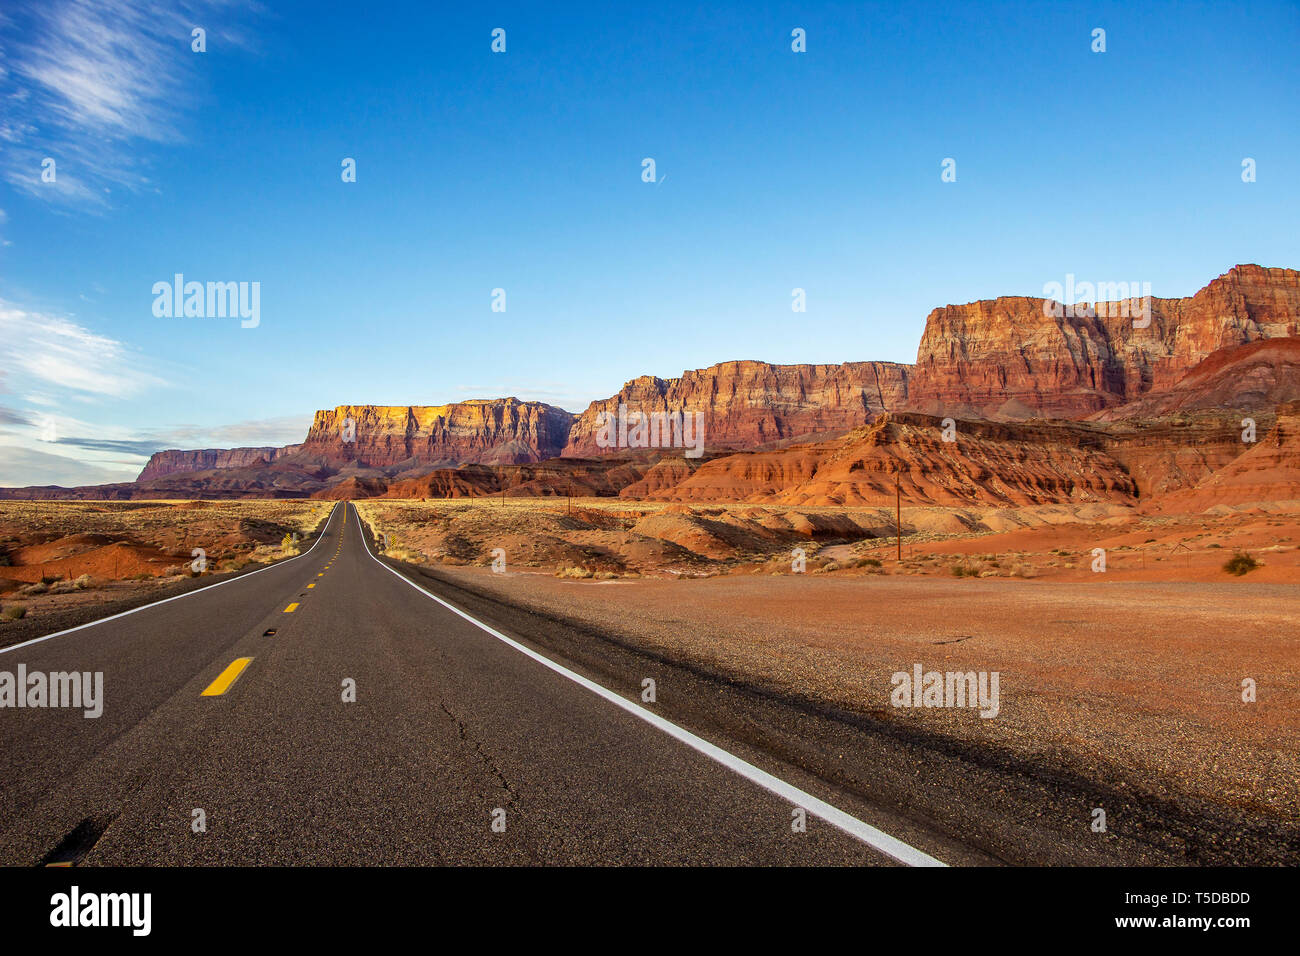 Lonely high desert highway to nowhere in Northern Arizona. Stock Photo